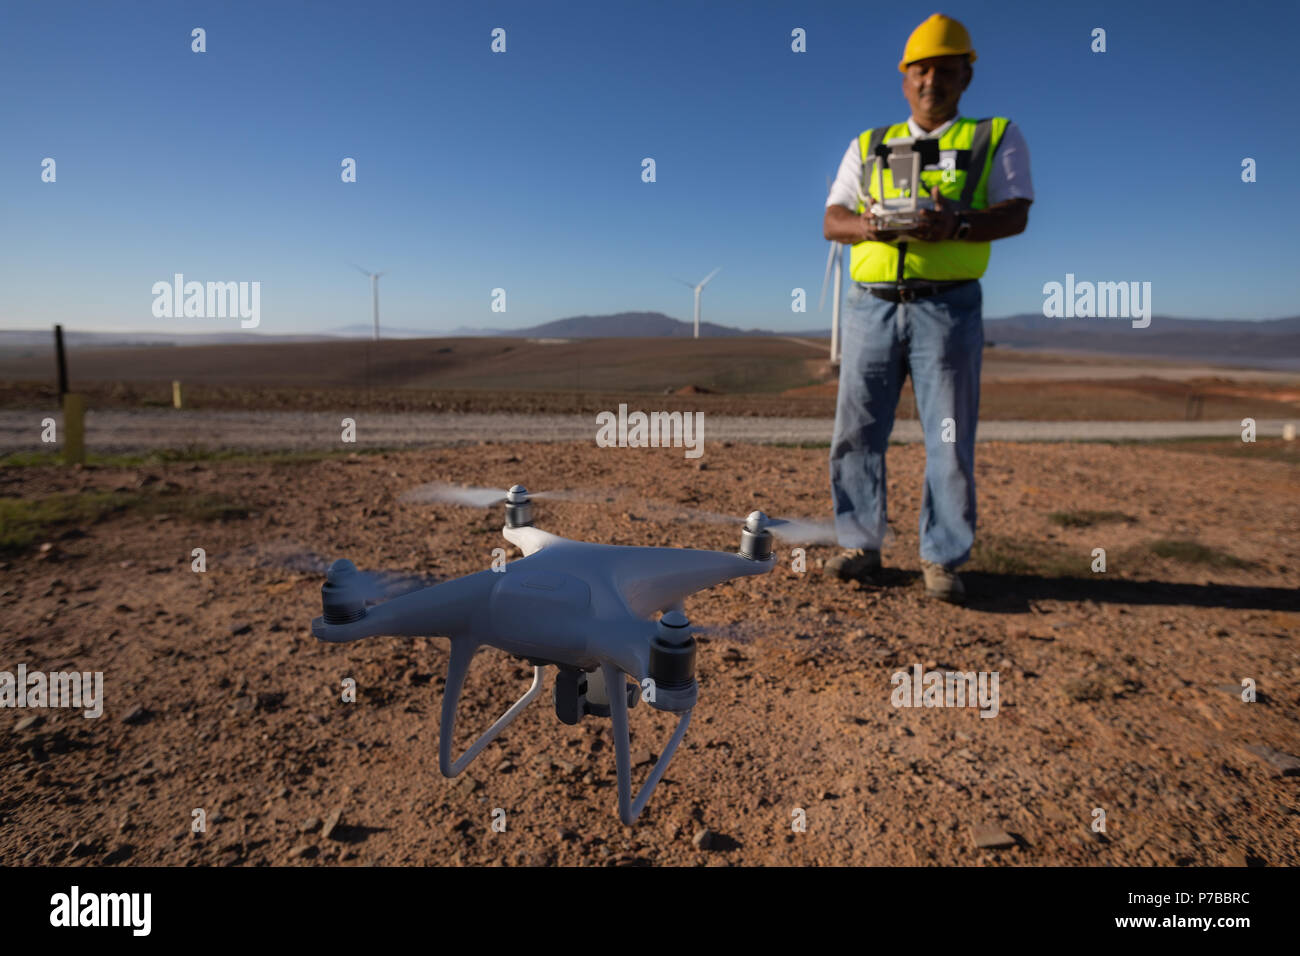 Ingeniero controla un drone con un controlador Foto de stock